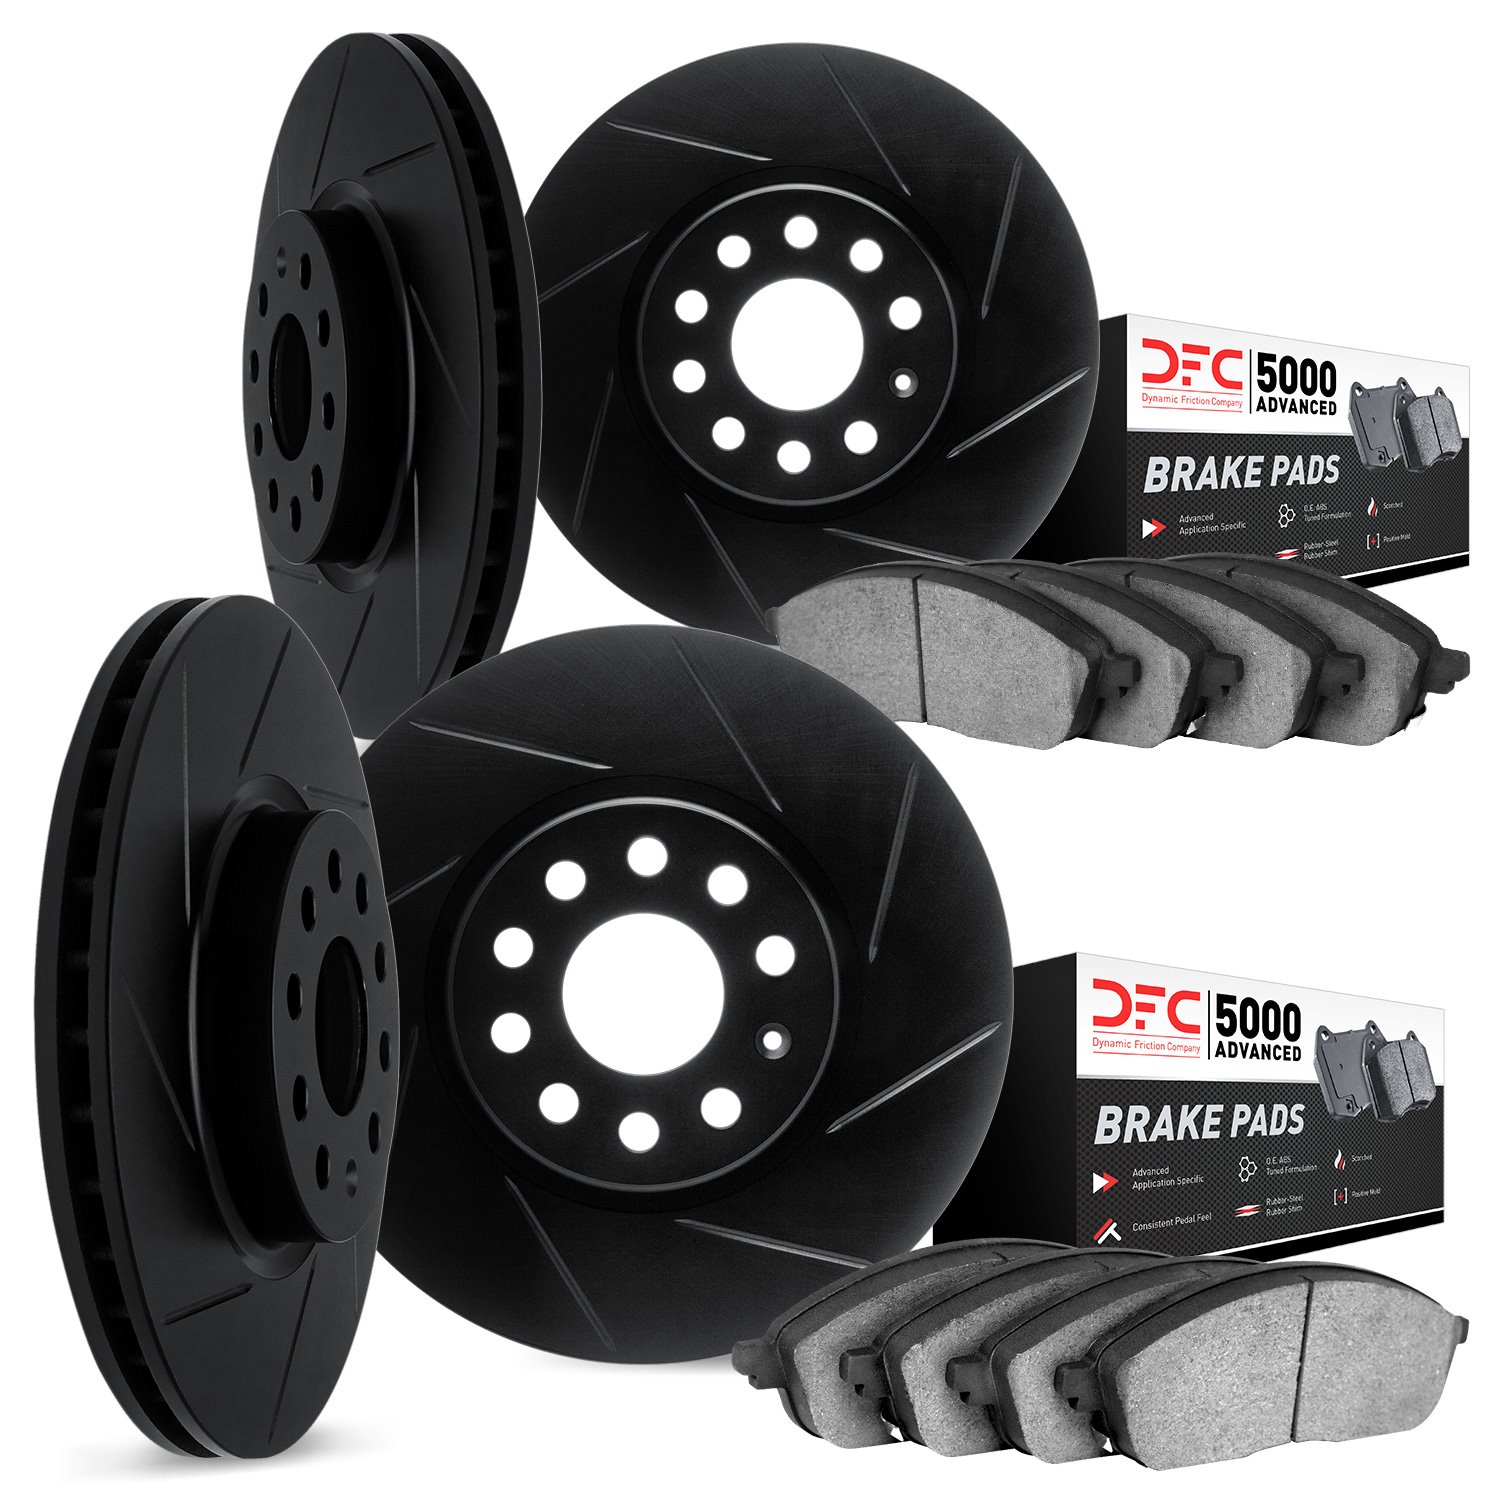 3514-67077 Slotted Brake Rotors w/5000 Advanced Brake Pads Kit & Hardware [Black], 2016-2017 Infiniti/Nissan, Position: Front an